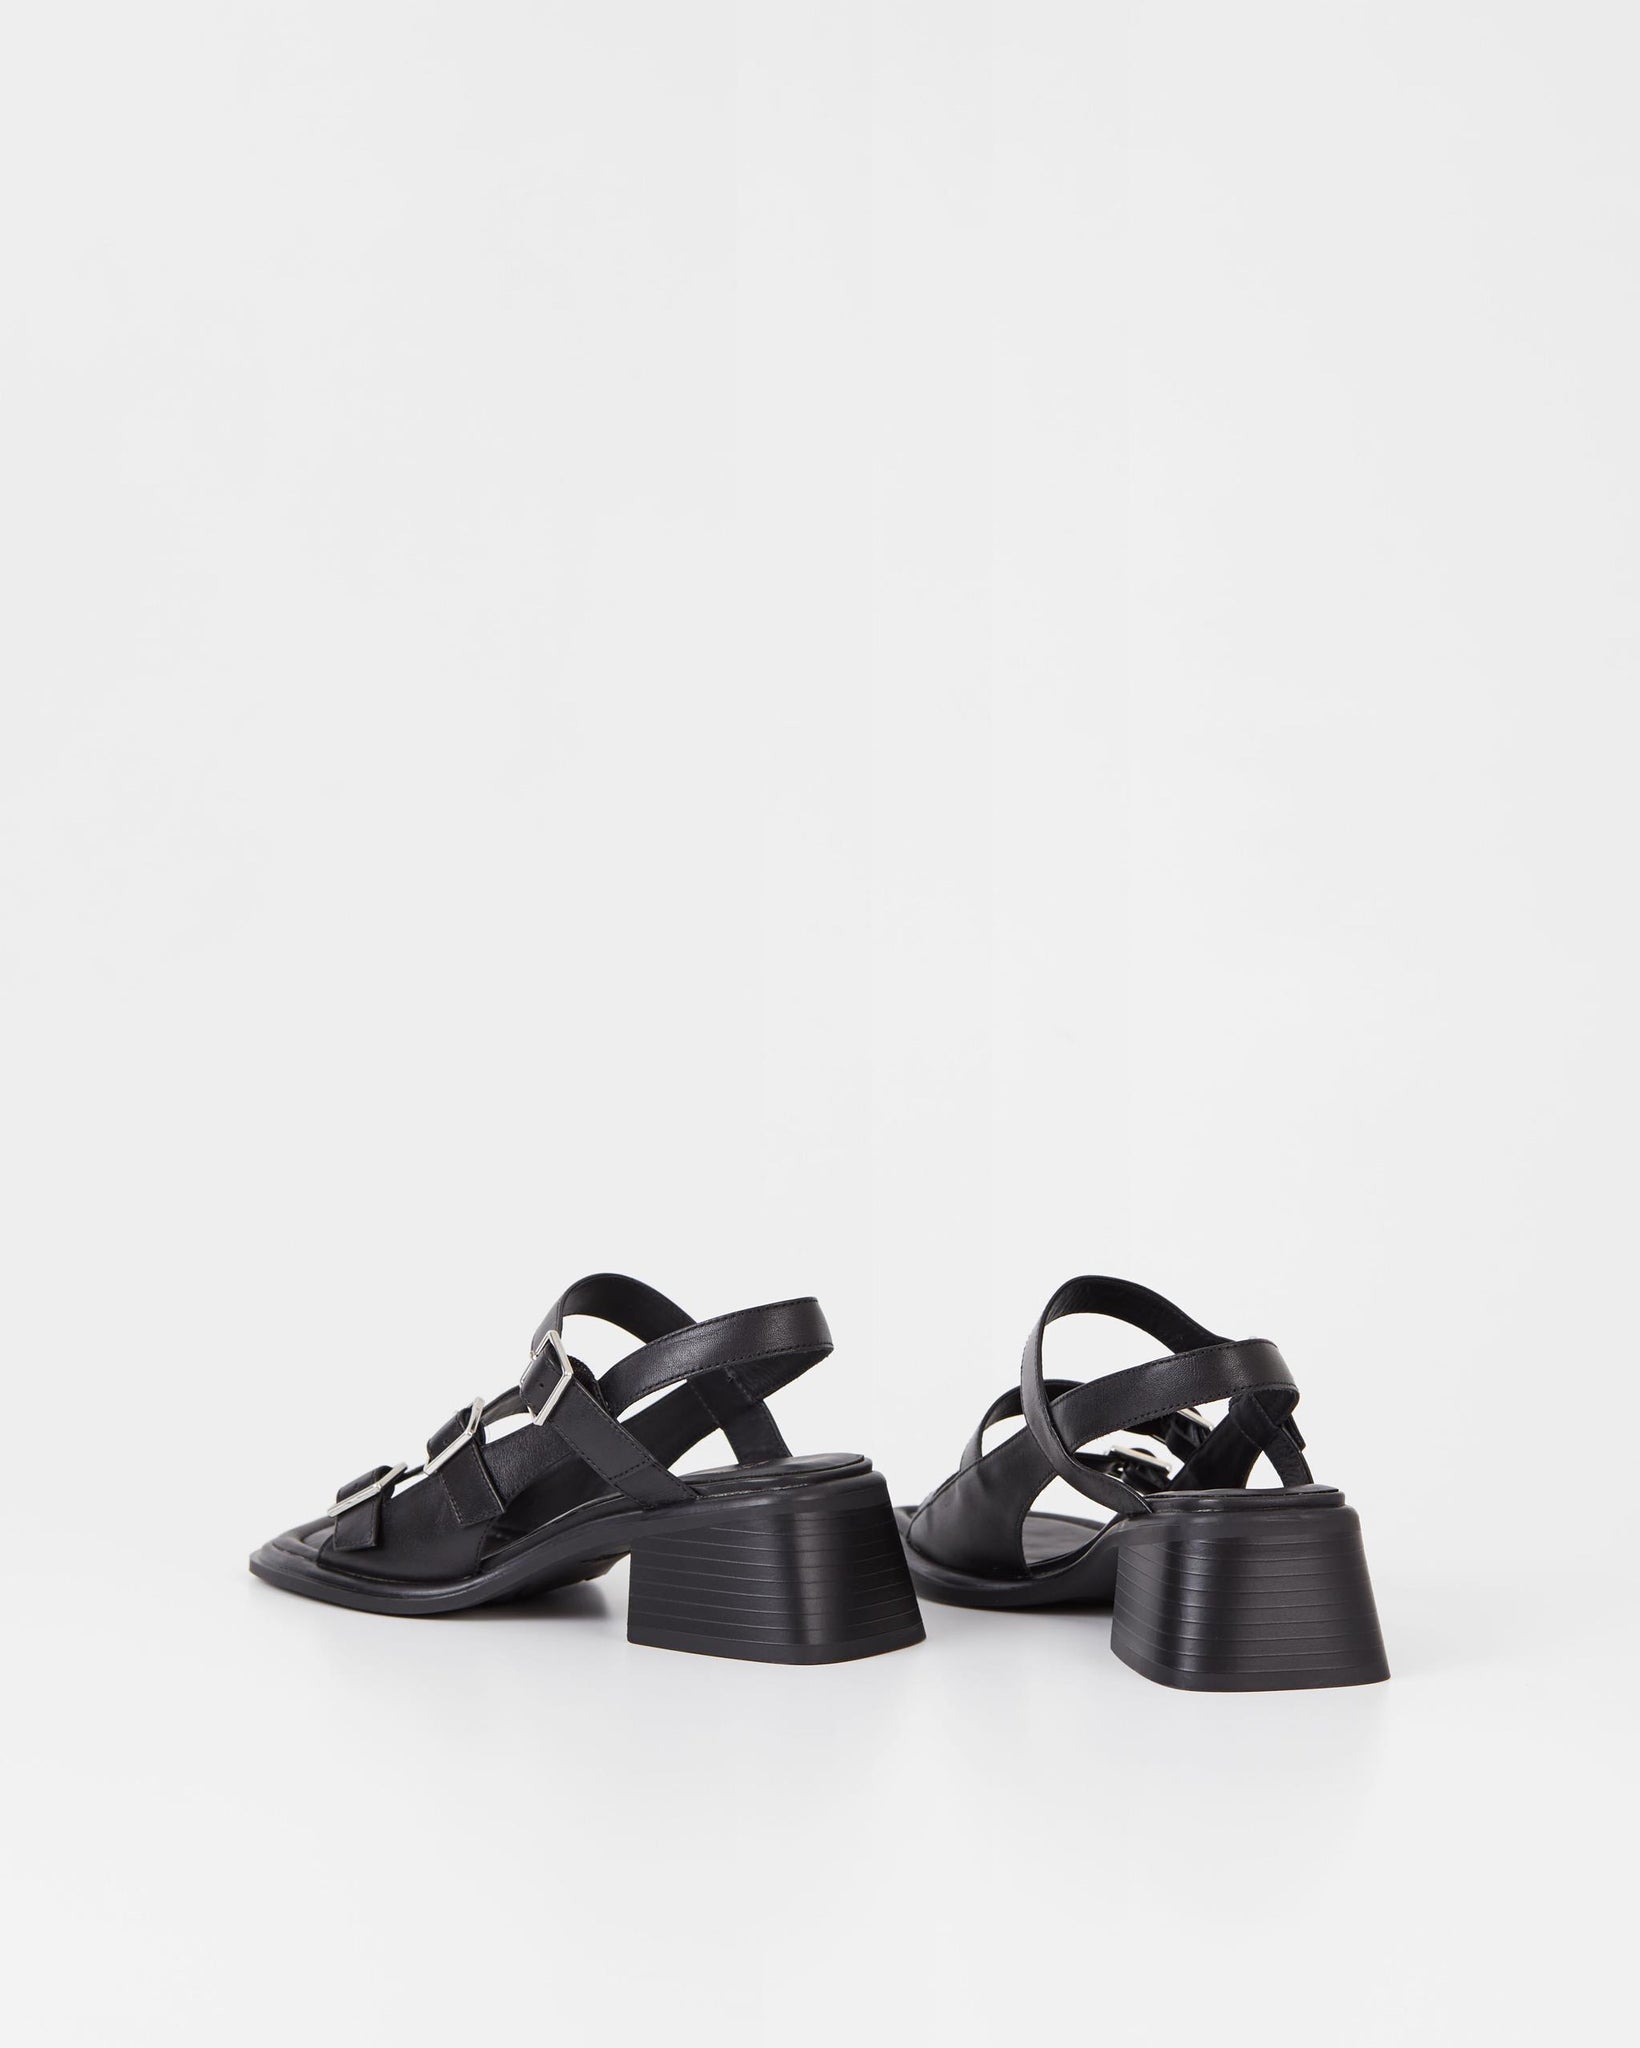 Ines (5711-001-20) Sandals - Negro